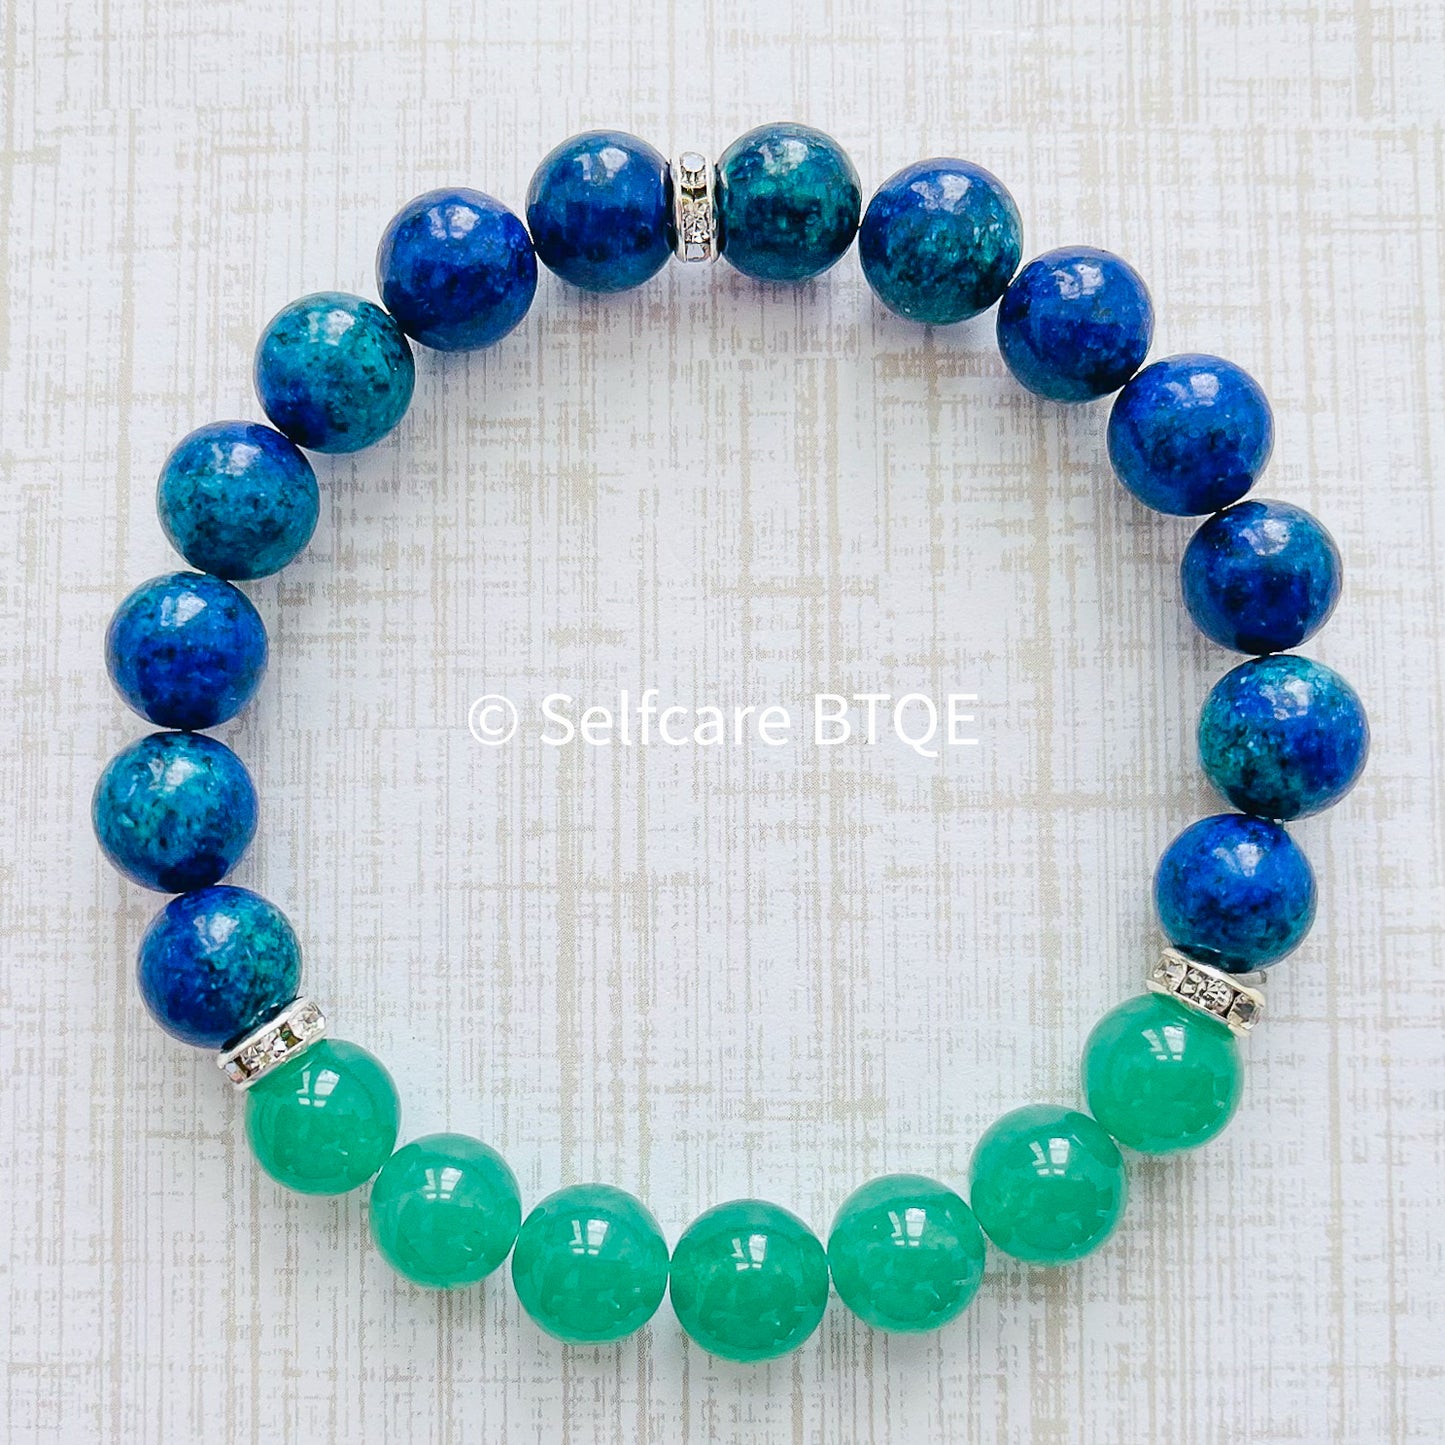 Serenity Turquoise and Aventurine Bracelet | 8mm